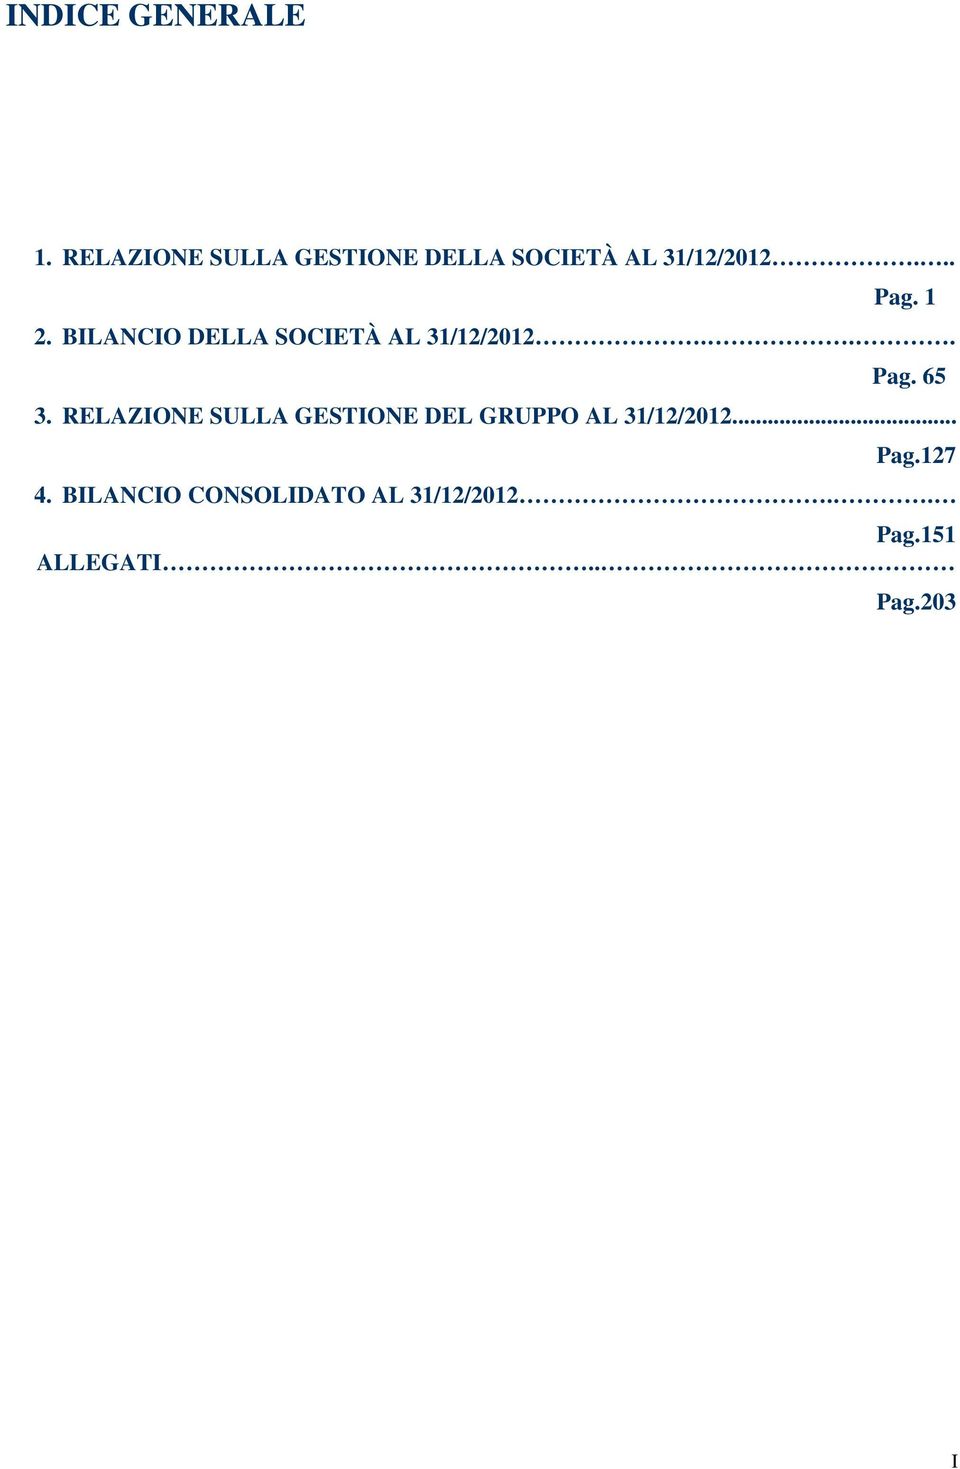 BILANCIO DELLA SOCIETÀ AL 31/12/2012... Pag. 65 3.